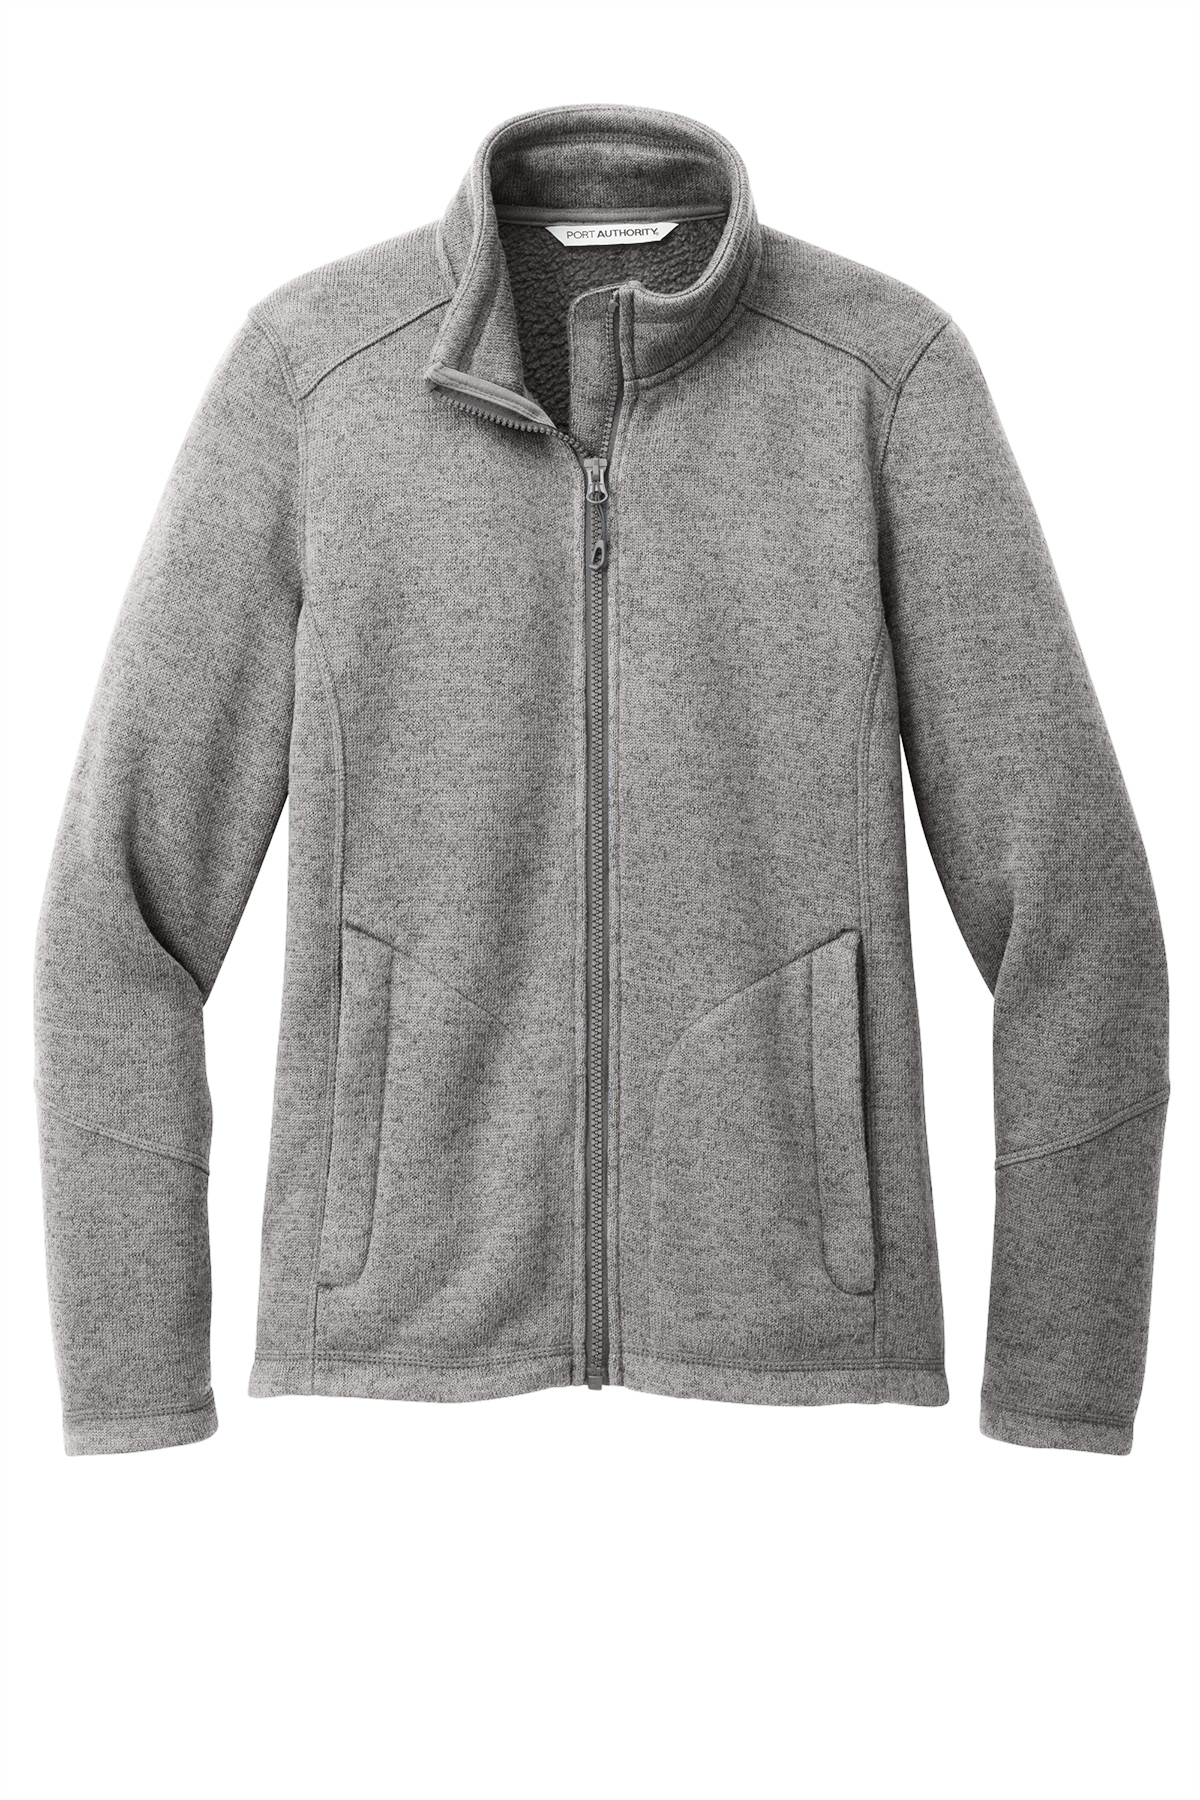 Port Authority Ladies Arc Sweater Fleece Long Jacket L425 - Deep